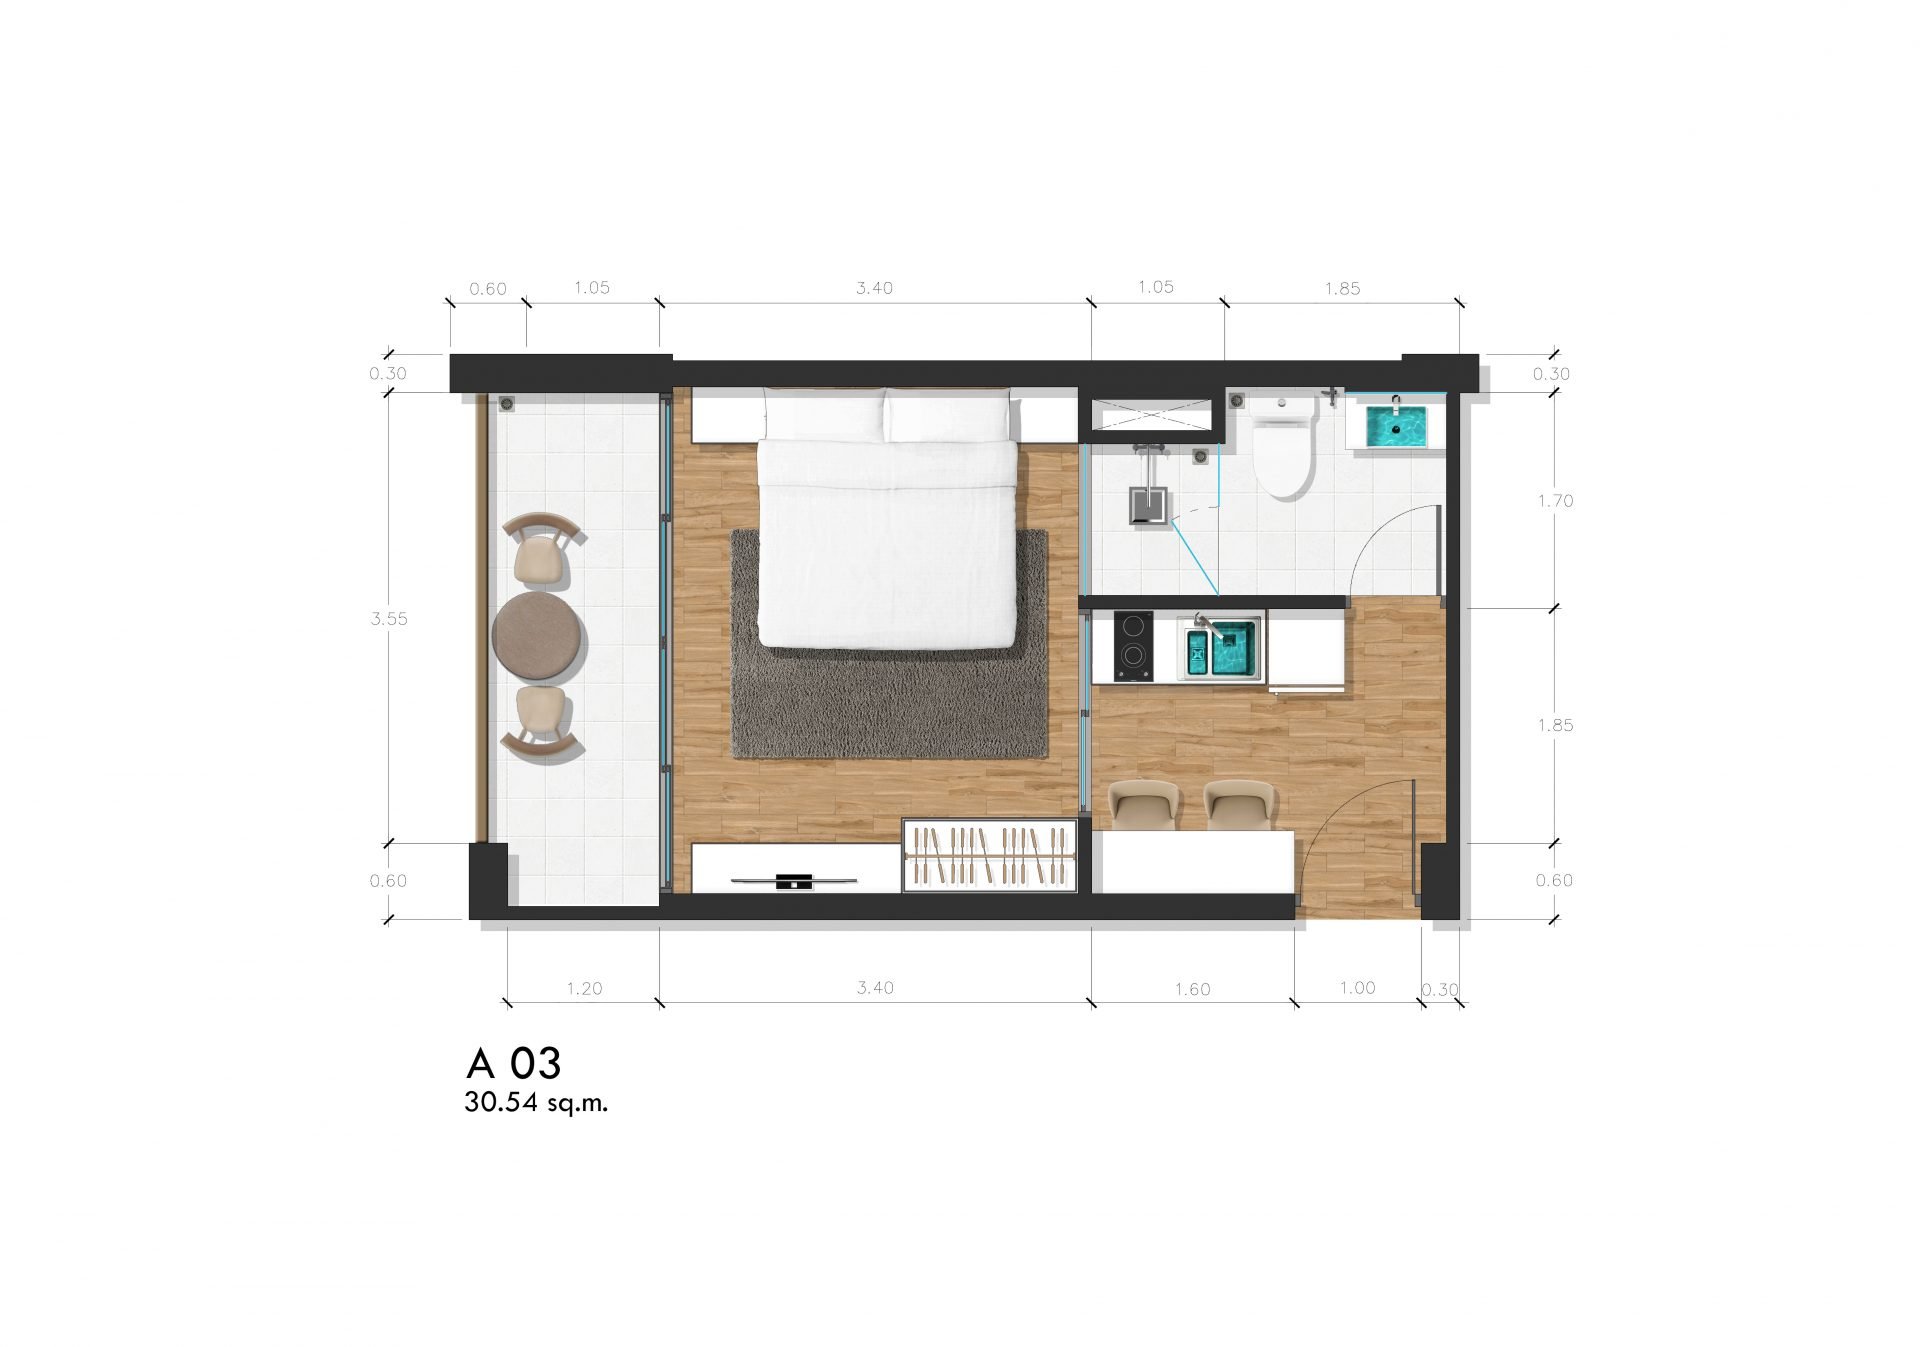 1-Bedroom (A-03)